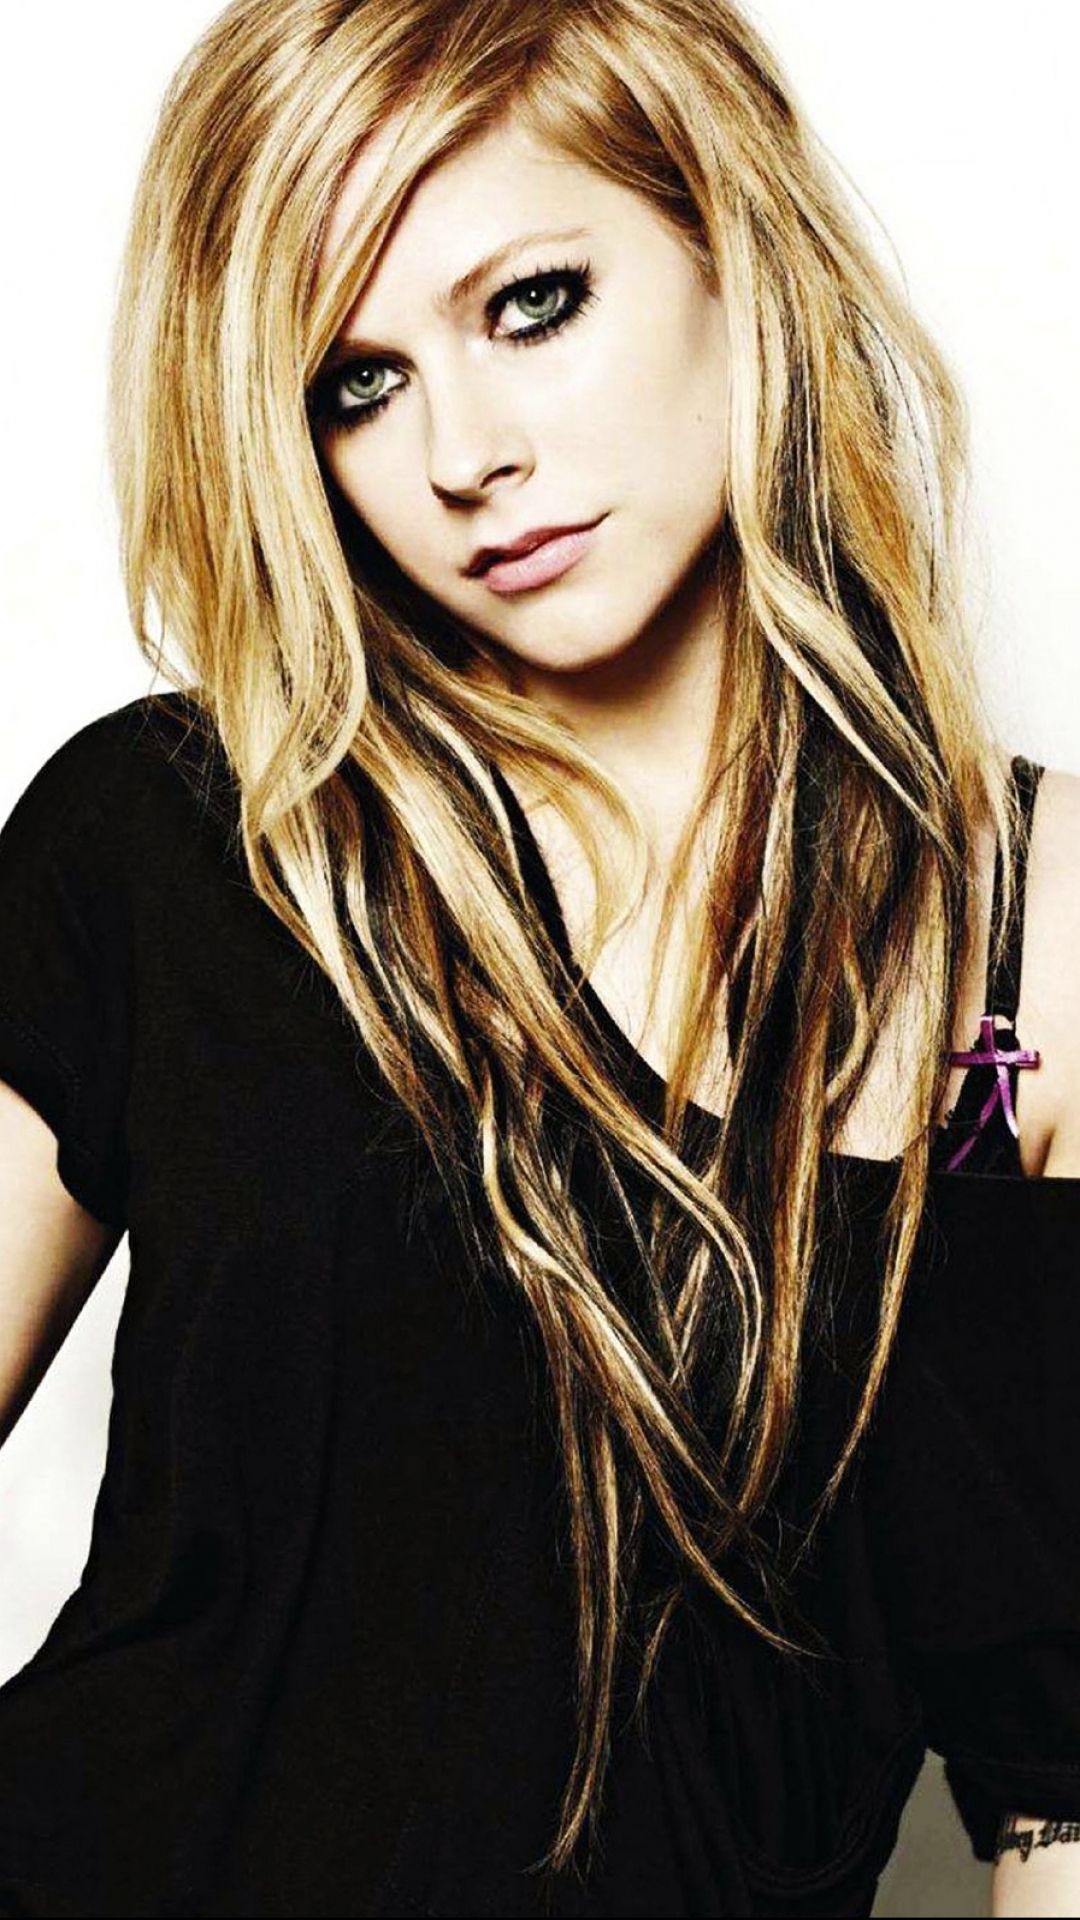 Avril Lavigne Wallpaper Mobile